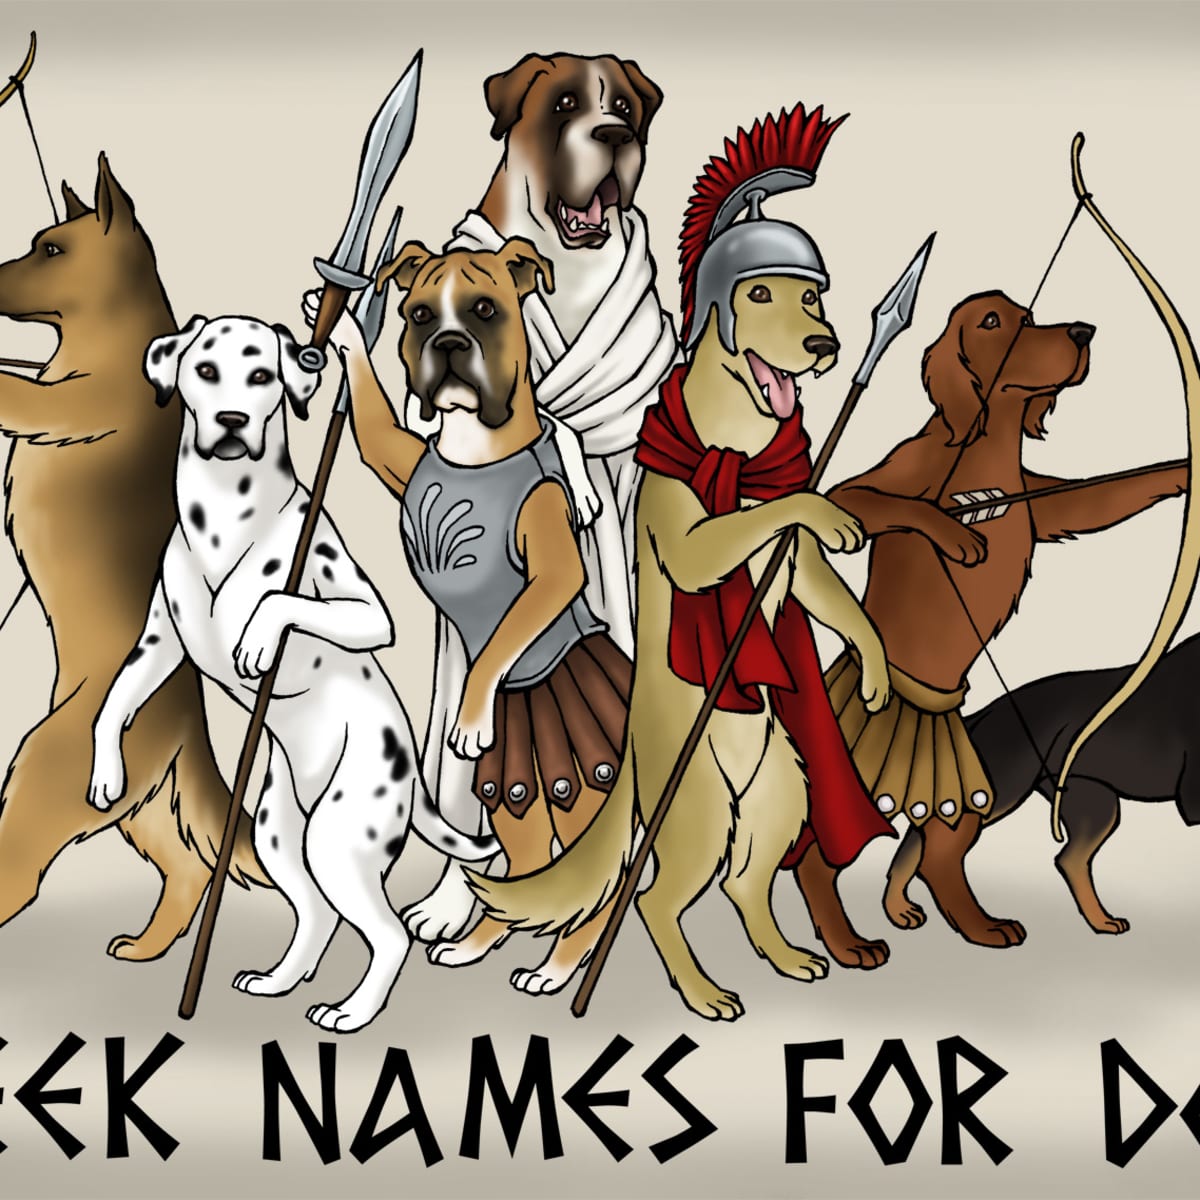 155 Mythic, Male Greek Gods That Make Cool Dog Names - PetHelpful